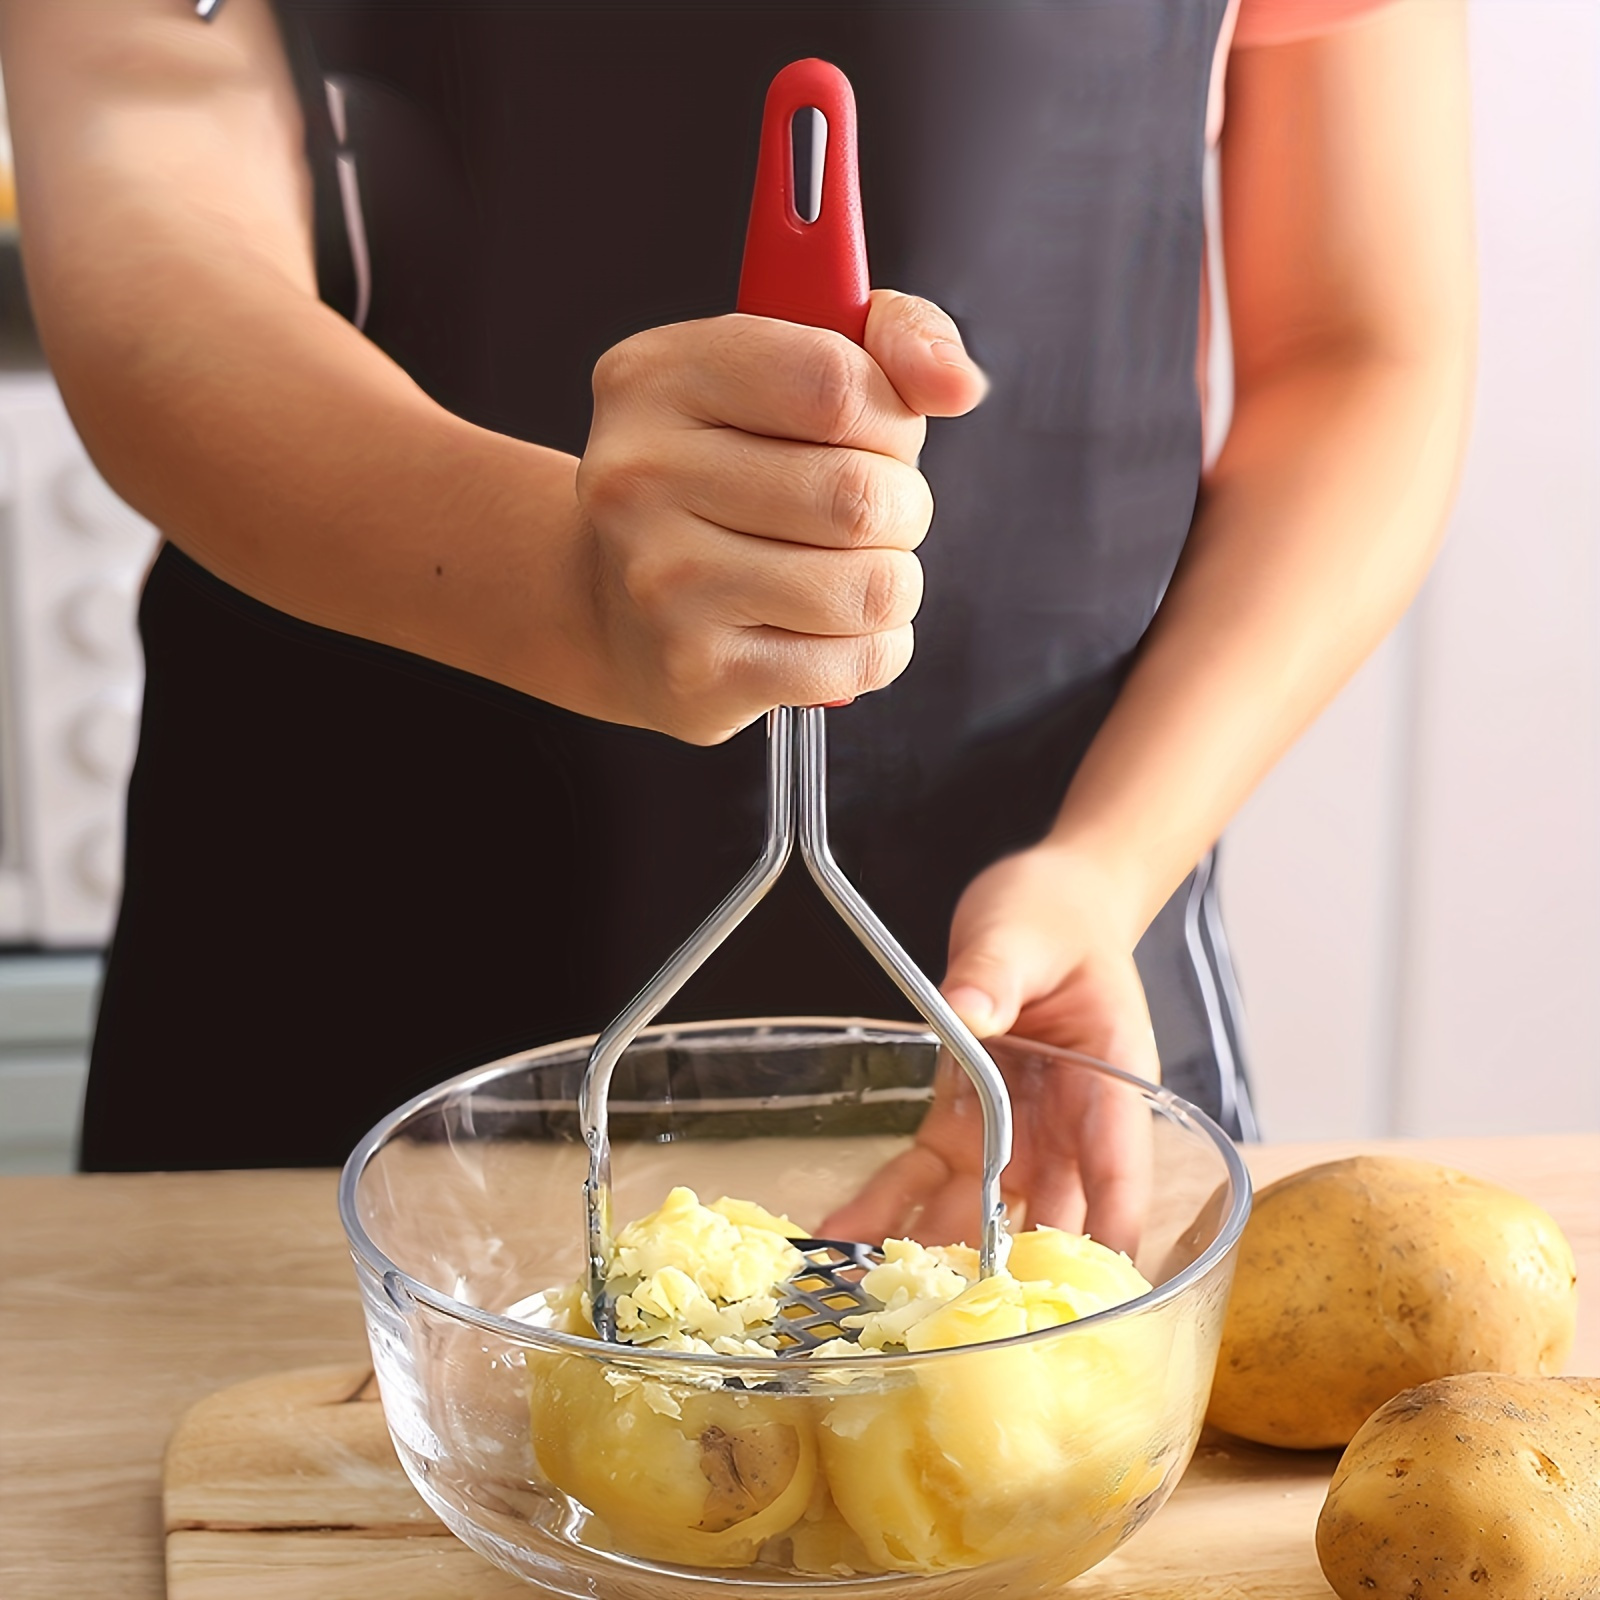 Stainless Steel Pusher Potato Masher Fruit Hand Masher Press Crusher Home  Tools Press Kitchen Accessories Hand Held